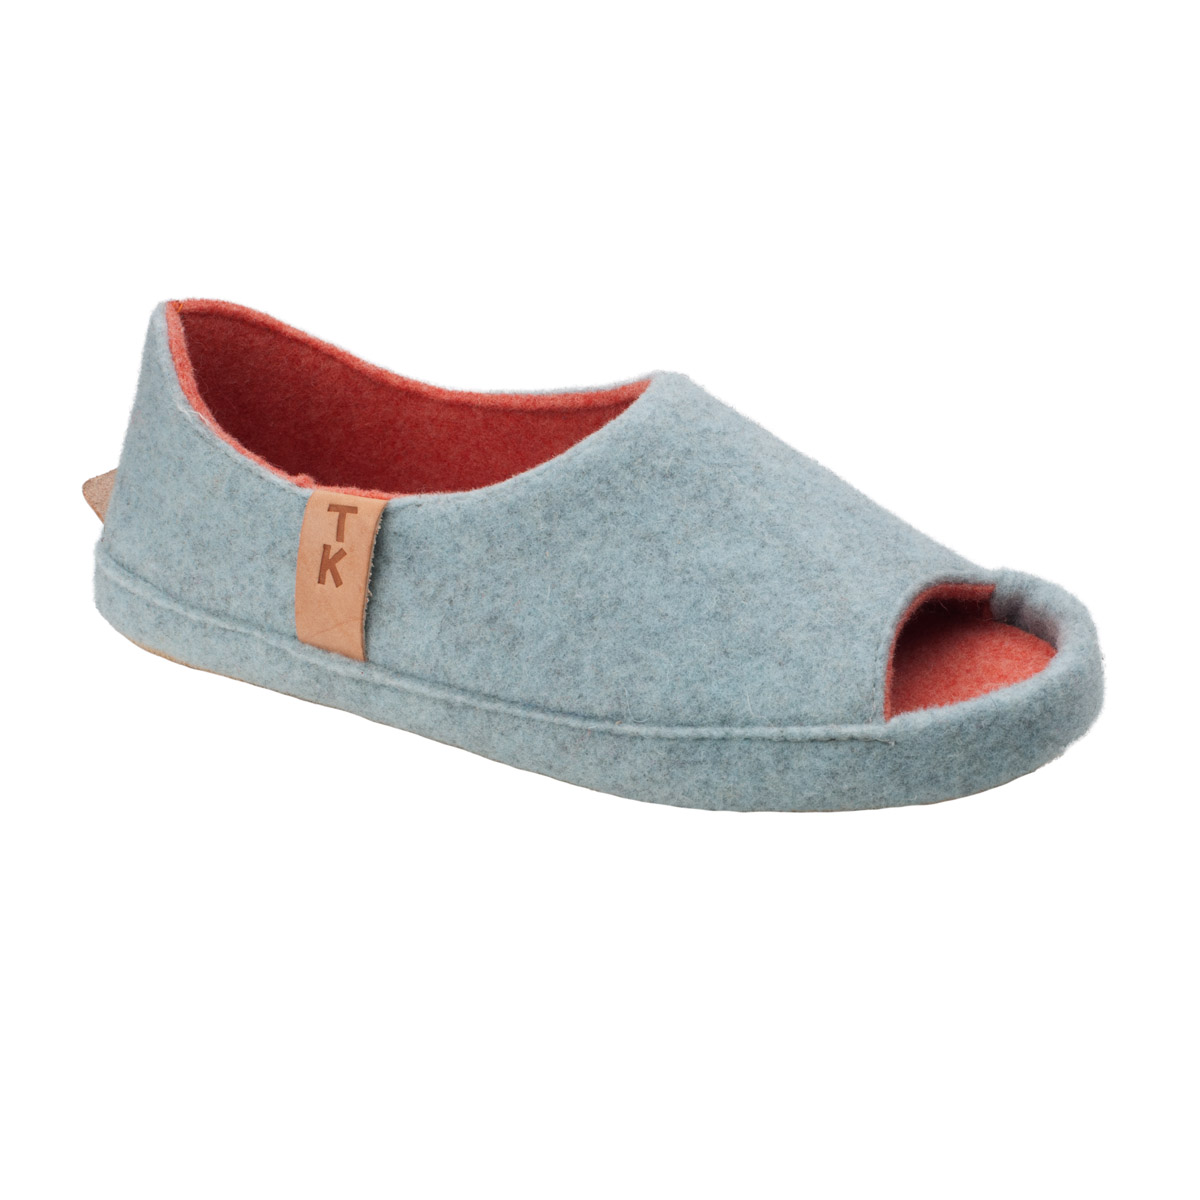 Handmade ethically made slippers